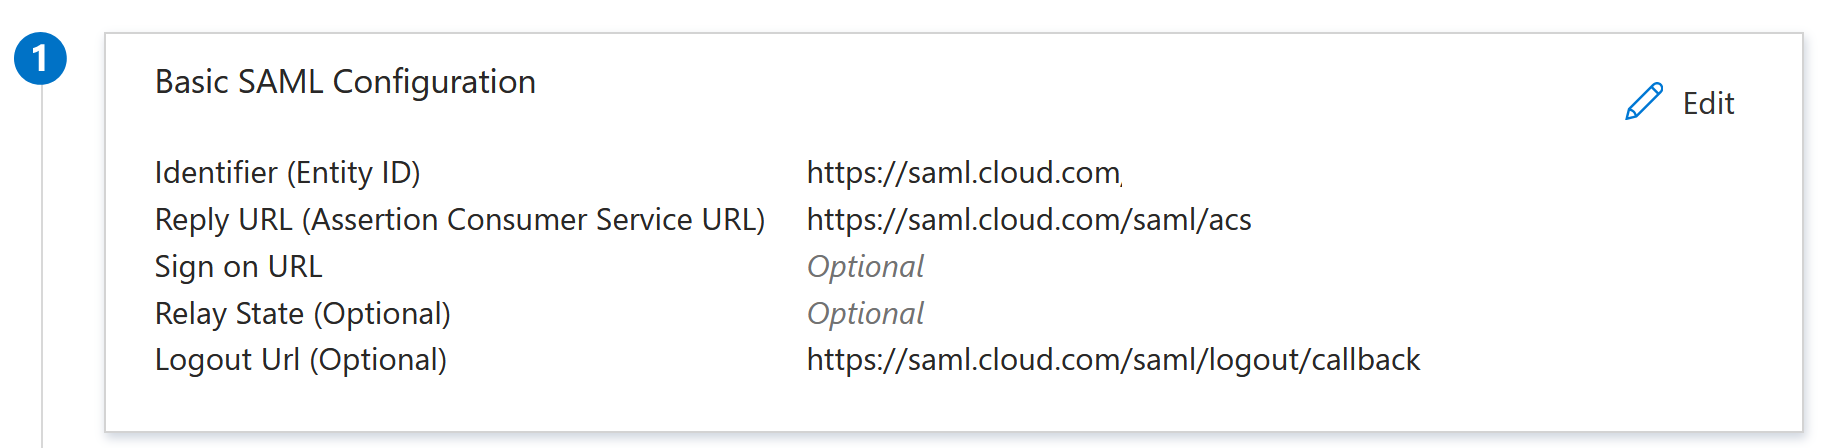 基本 SAML 配置